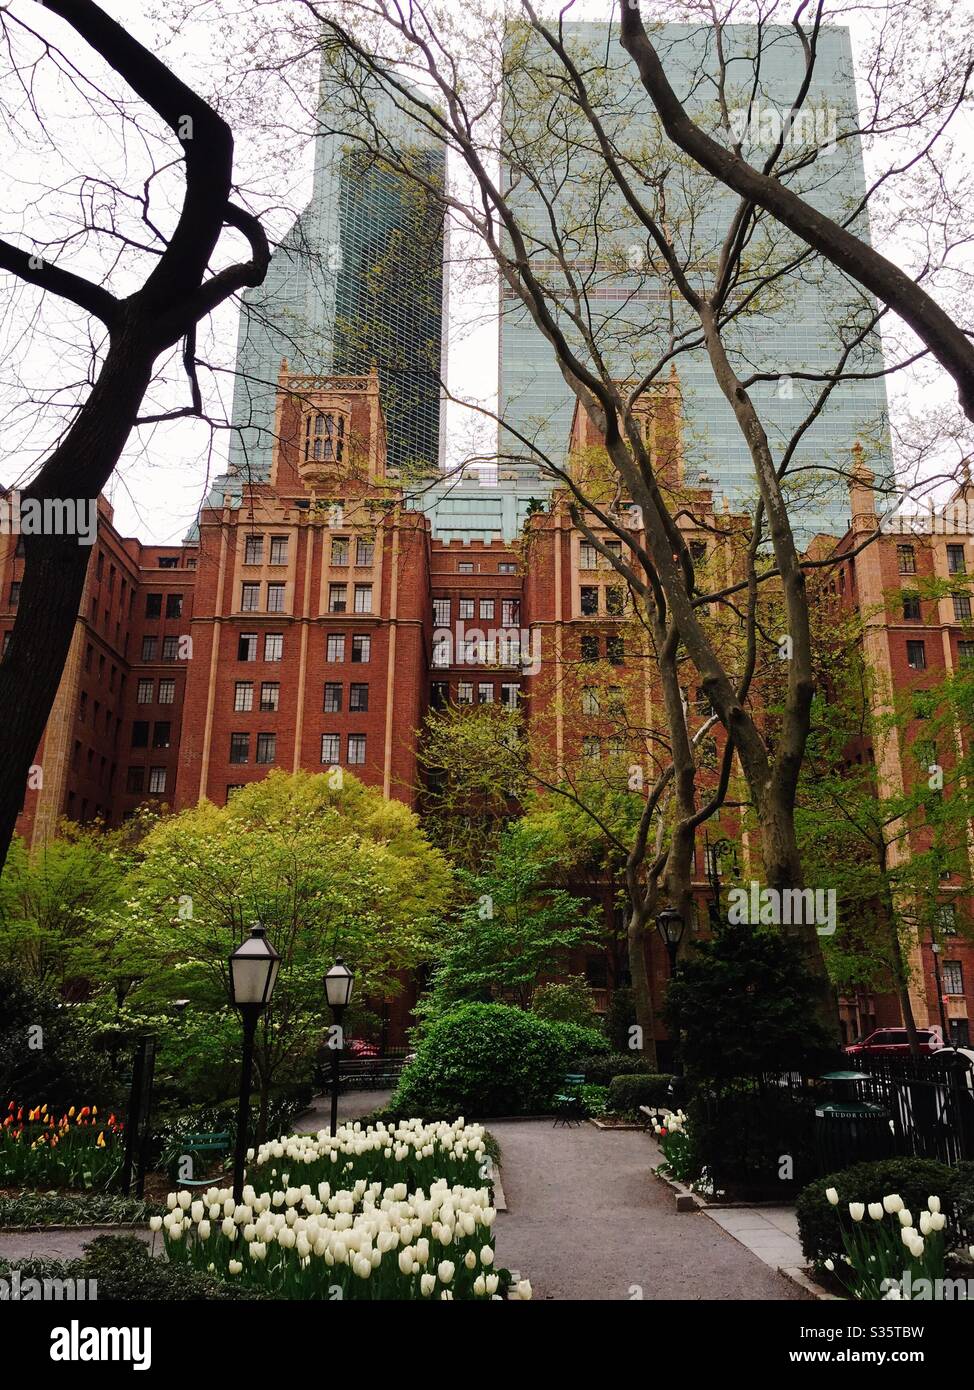 Tutor city greens is an urban garden in midtown Manhattan, NYC, USA Stock Photo